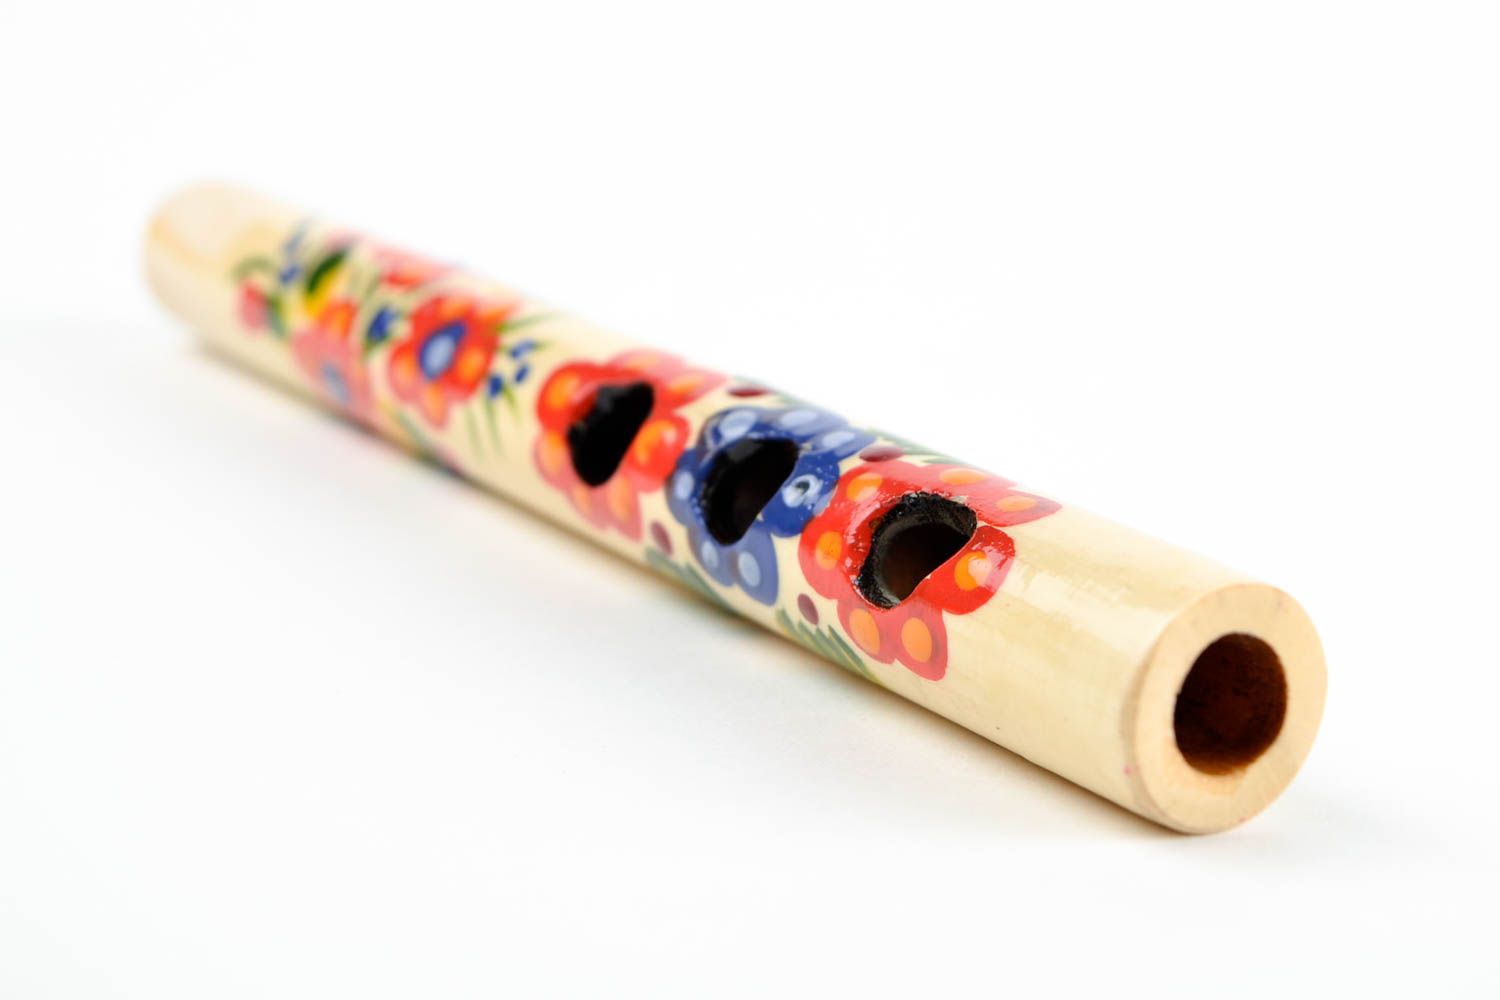 Handmade flute designer penny whistle unusual instrument gift ideas home decor photo 4